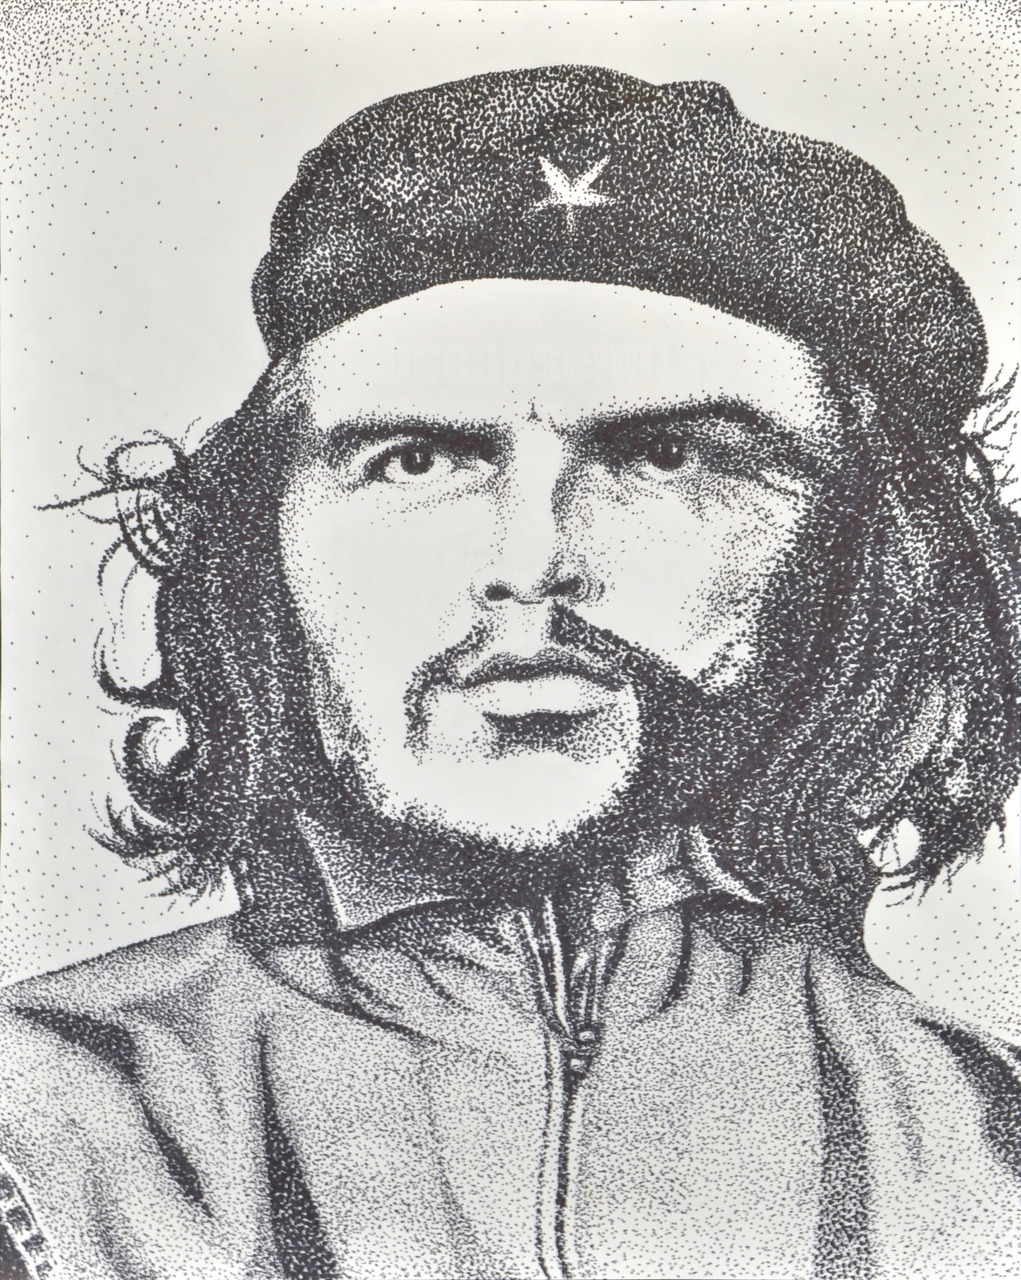 Che Guevara, stippling ain’t easy kids http://becauseimjay.tumblr.com/